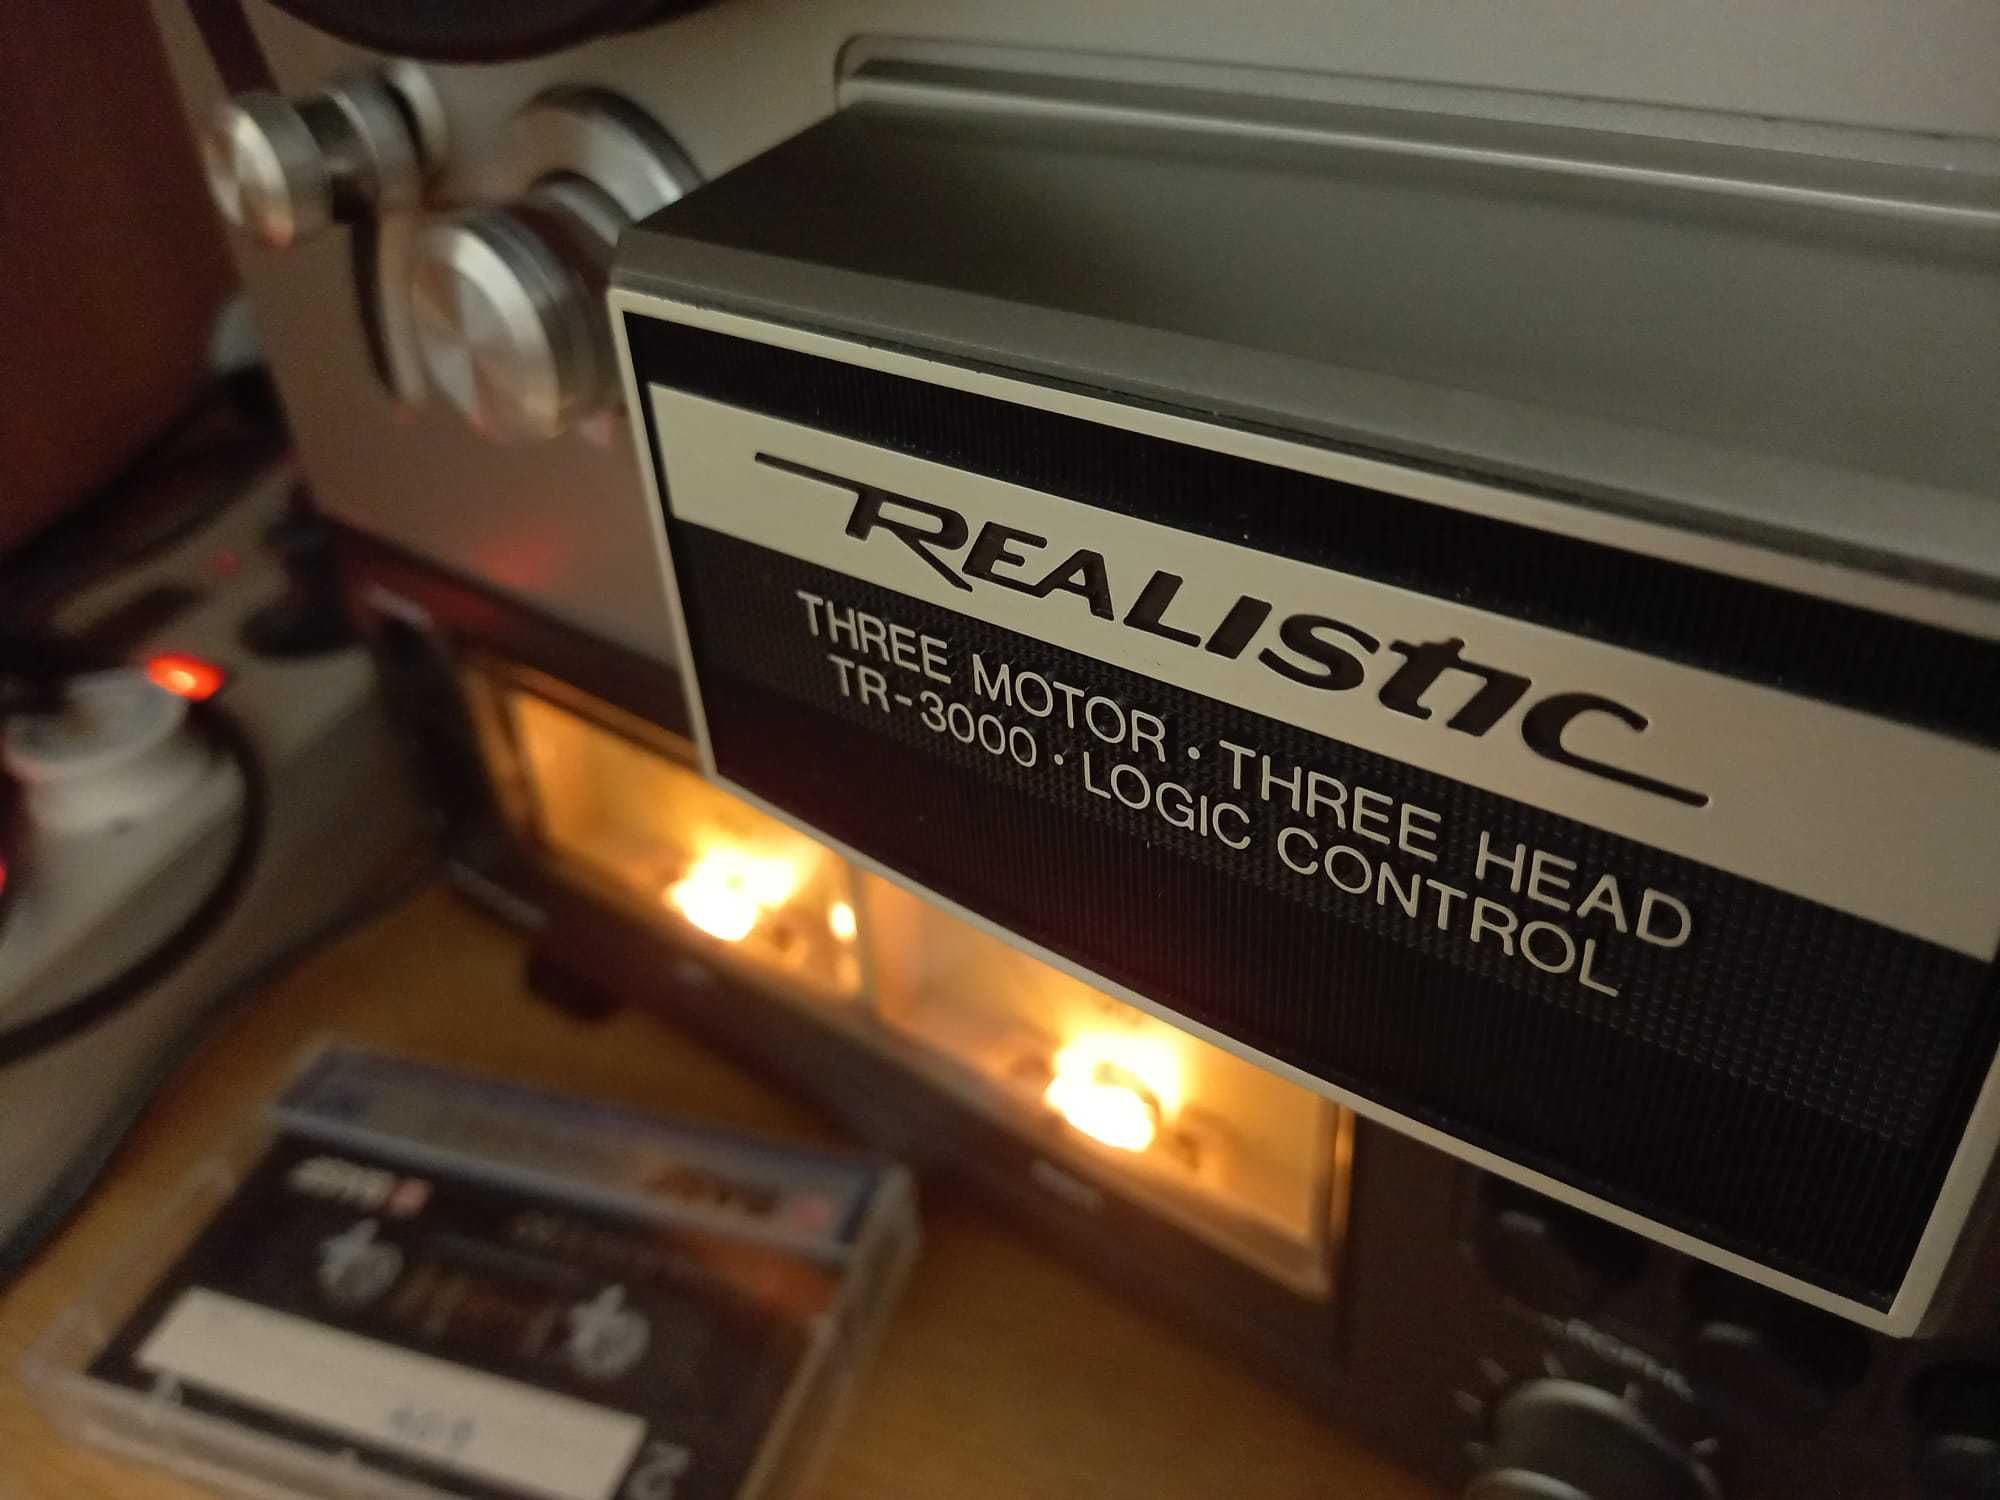 Magnetofon Realistic - TR-3000 - 3 motor - 3 head - Tape Deck 18 cm